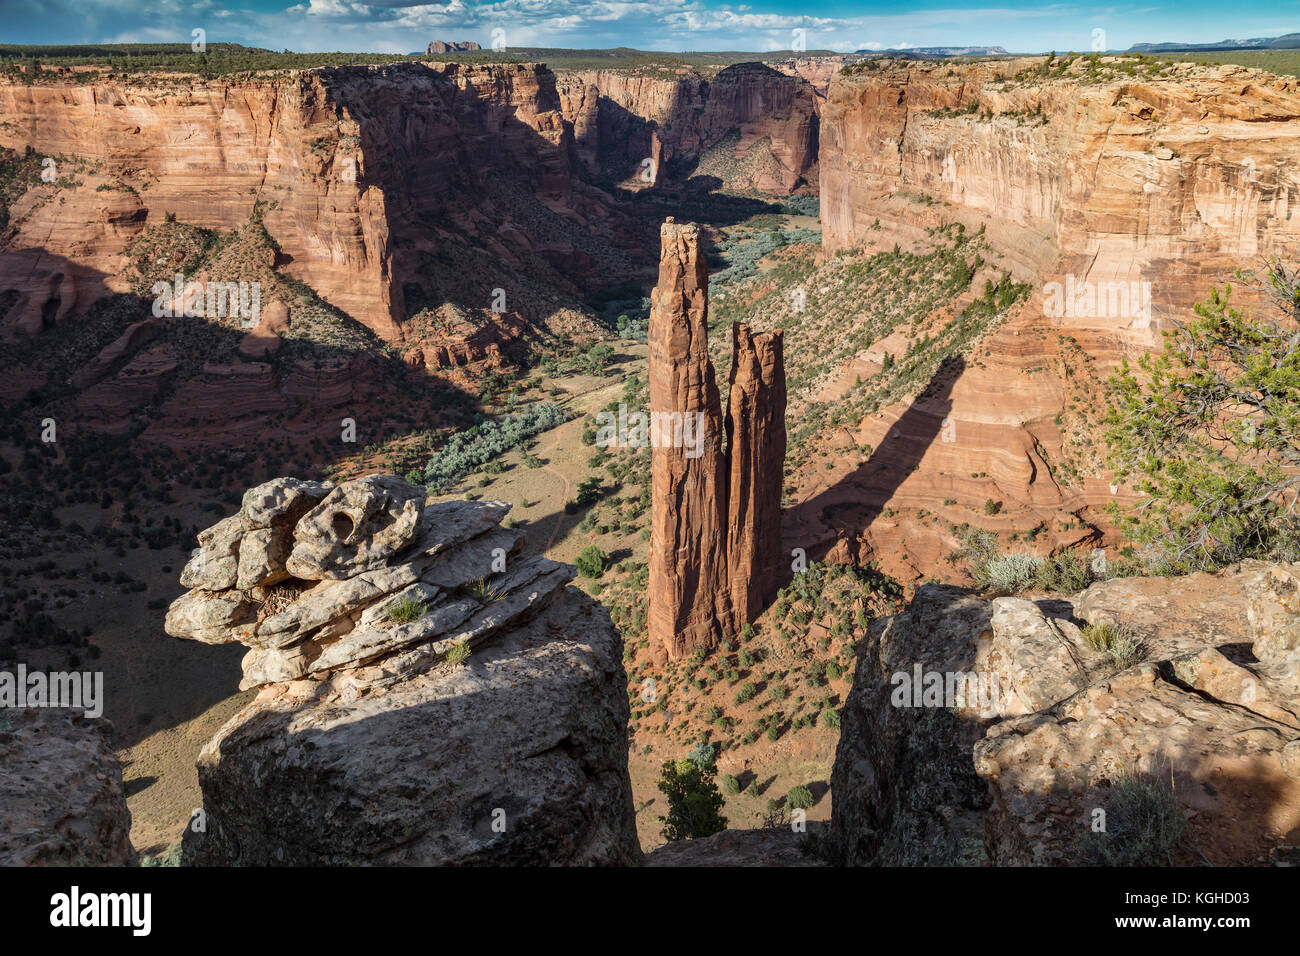 Spider Rock - Canyon de Chelly National Monument, Arizona Stock Photo